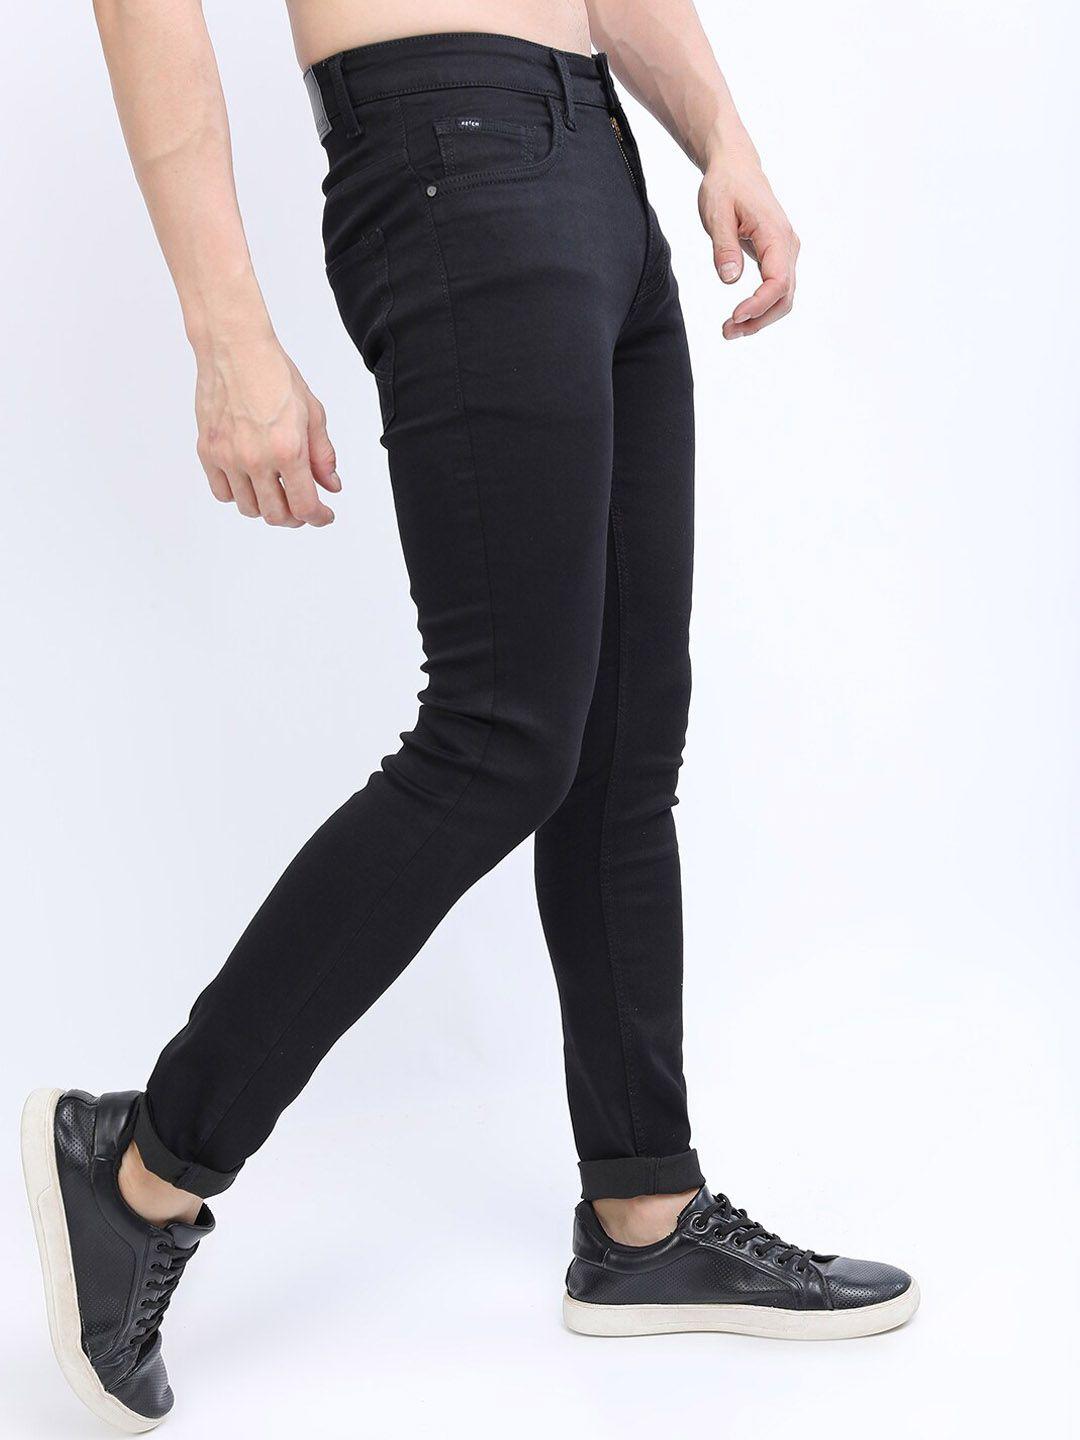 ketch-men-black-skinny-fit-clean-look-stretchable-jeans